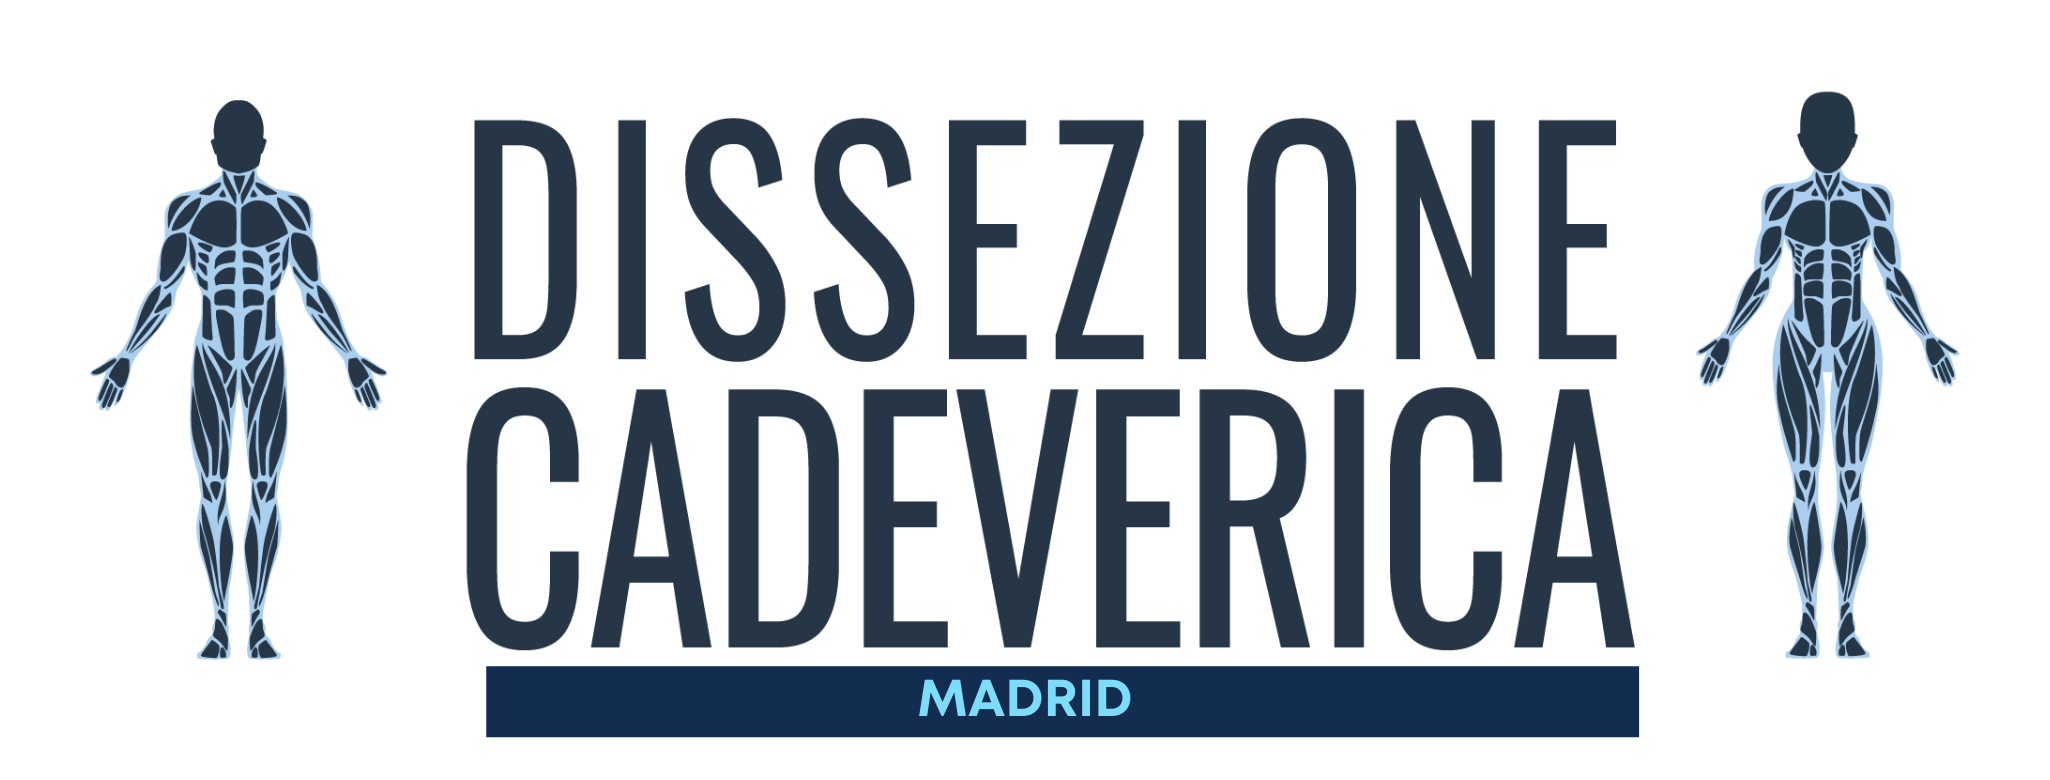 DISSEZIONE CADAVERICA - MADRID